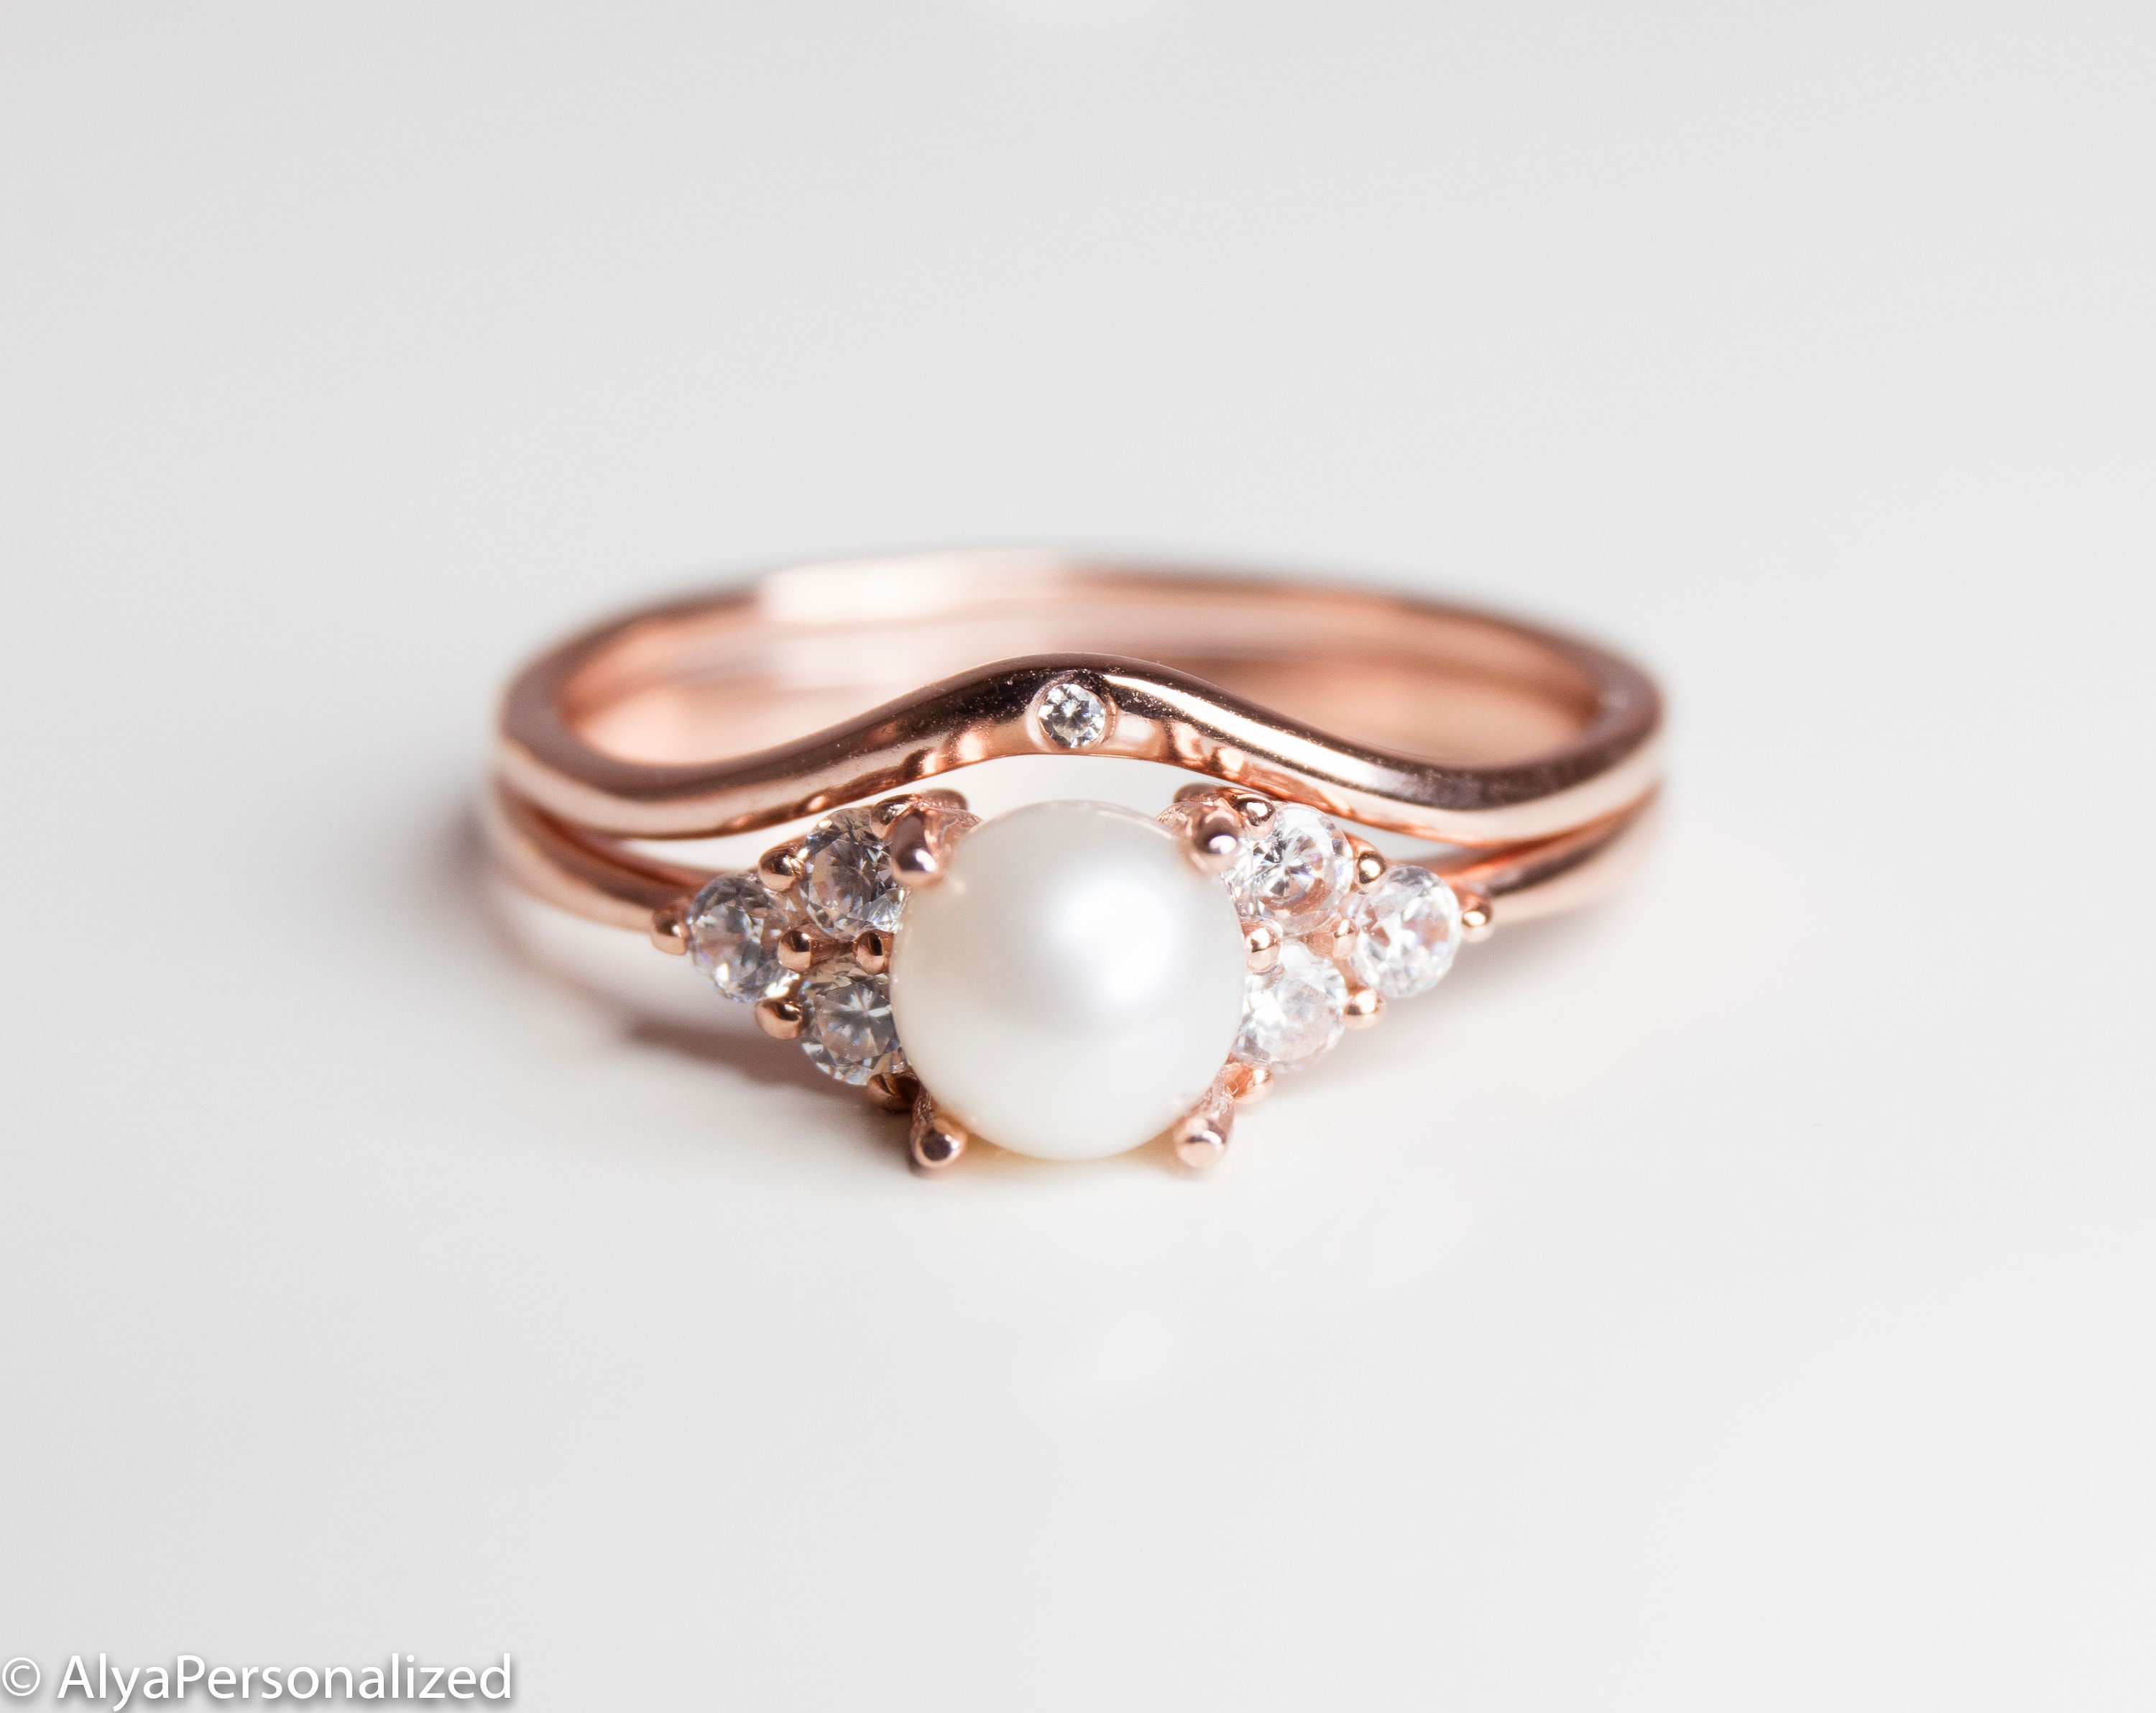 Pearl Wedding Rings With Diamonds